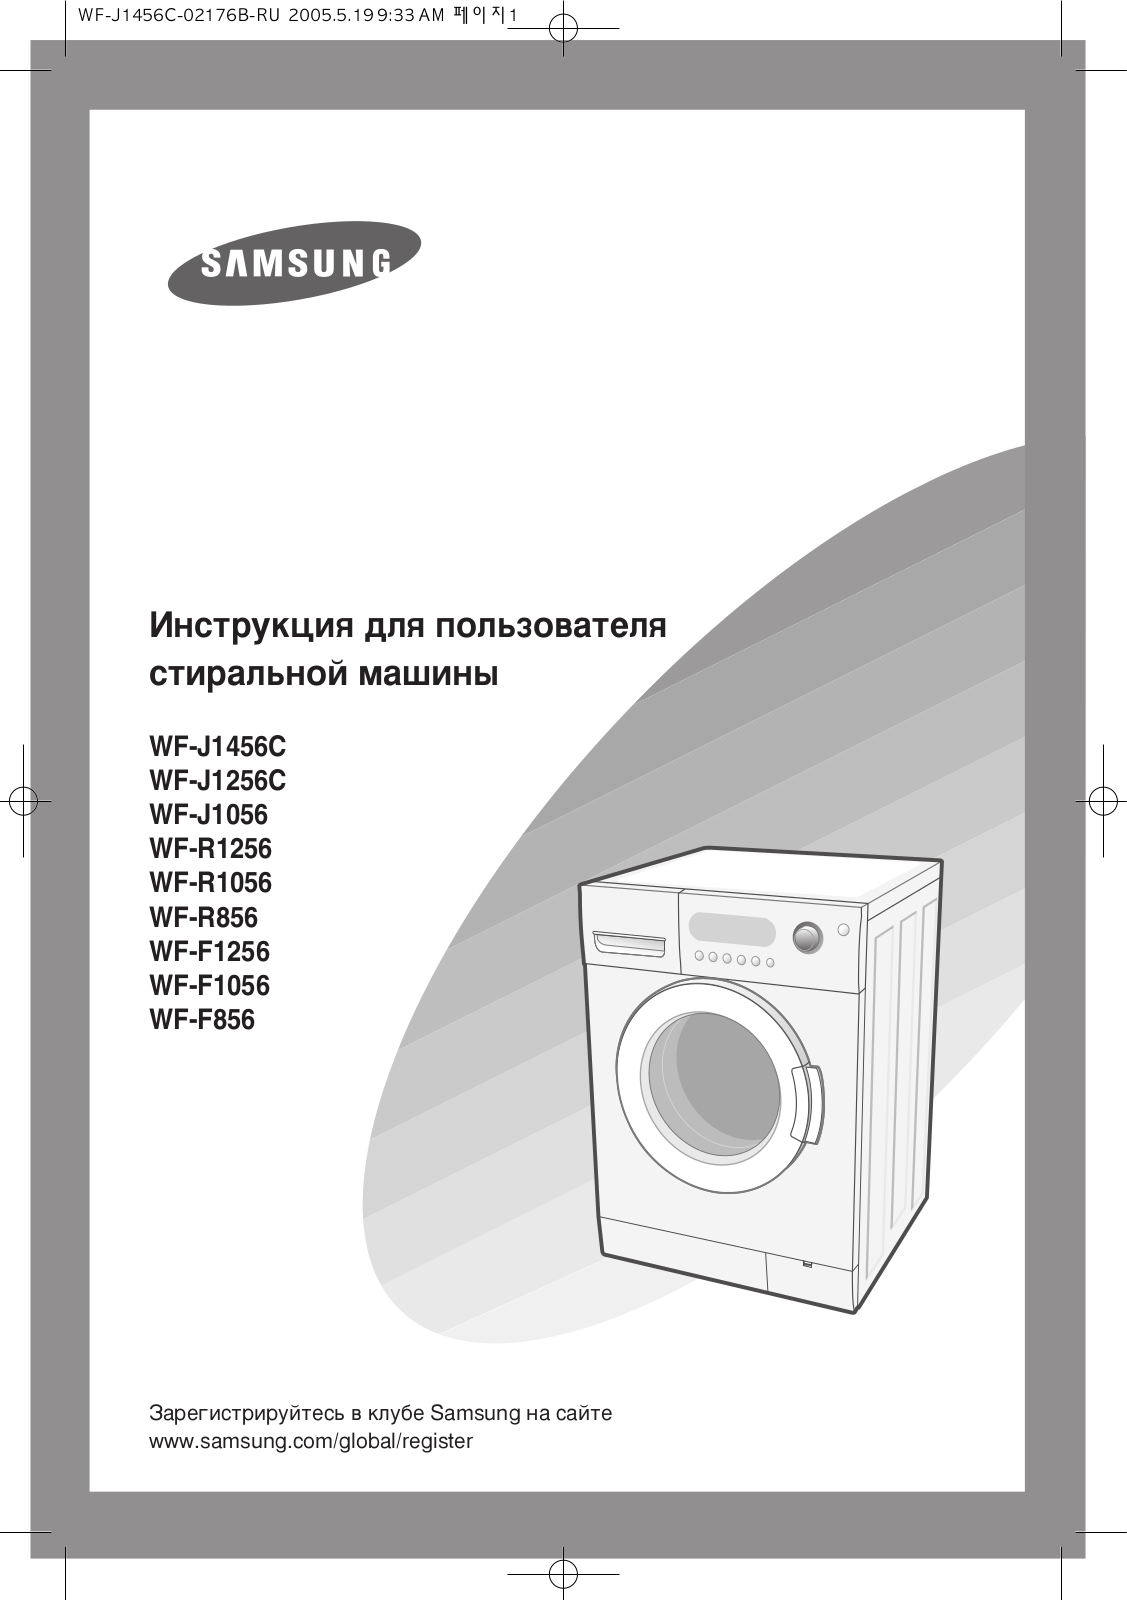 Samsung WF-F856, WF-F1256, WF-F1056 User Manual